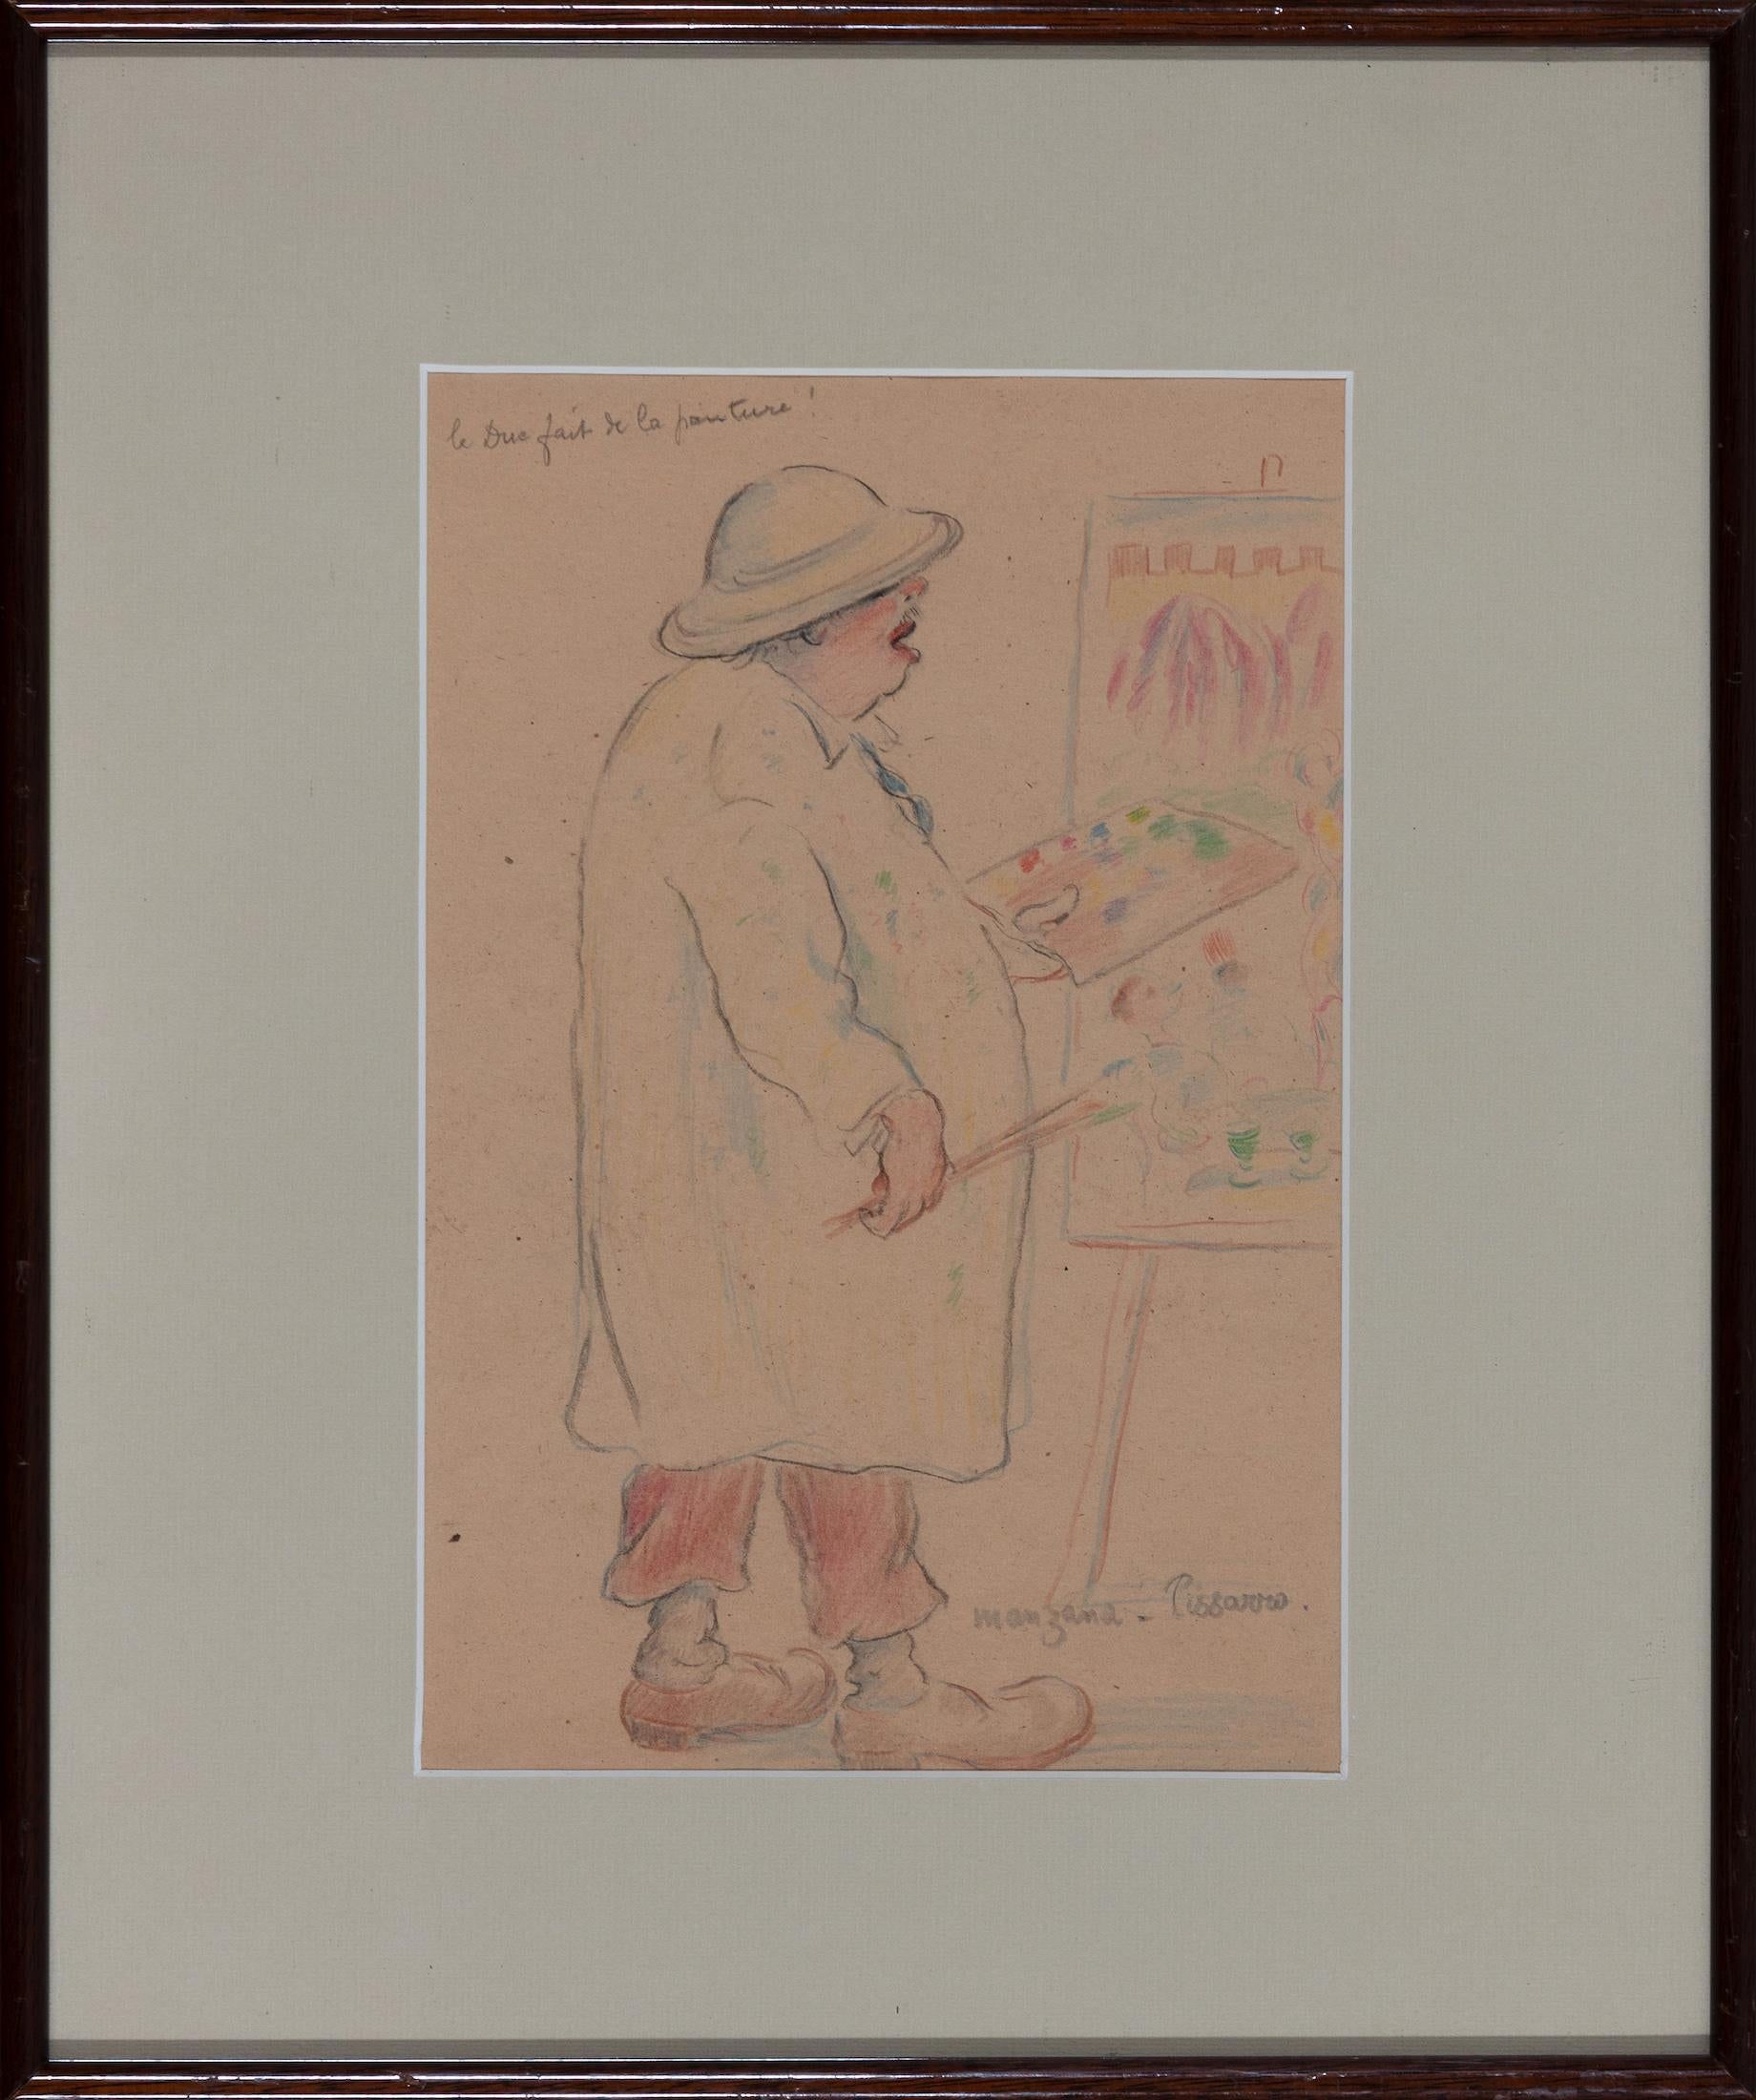 Le Due Fait de la Peinture by Georges Manzana Pissarro - Colourful drawing - Art by Georges Henri Manzana Pissarro